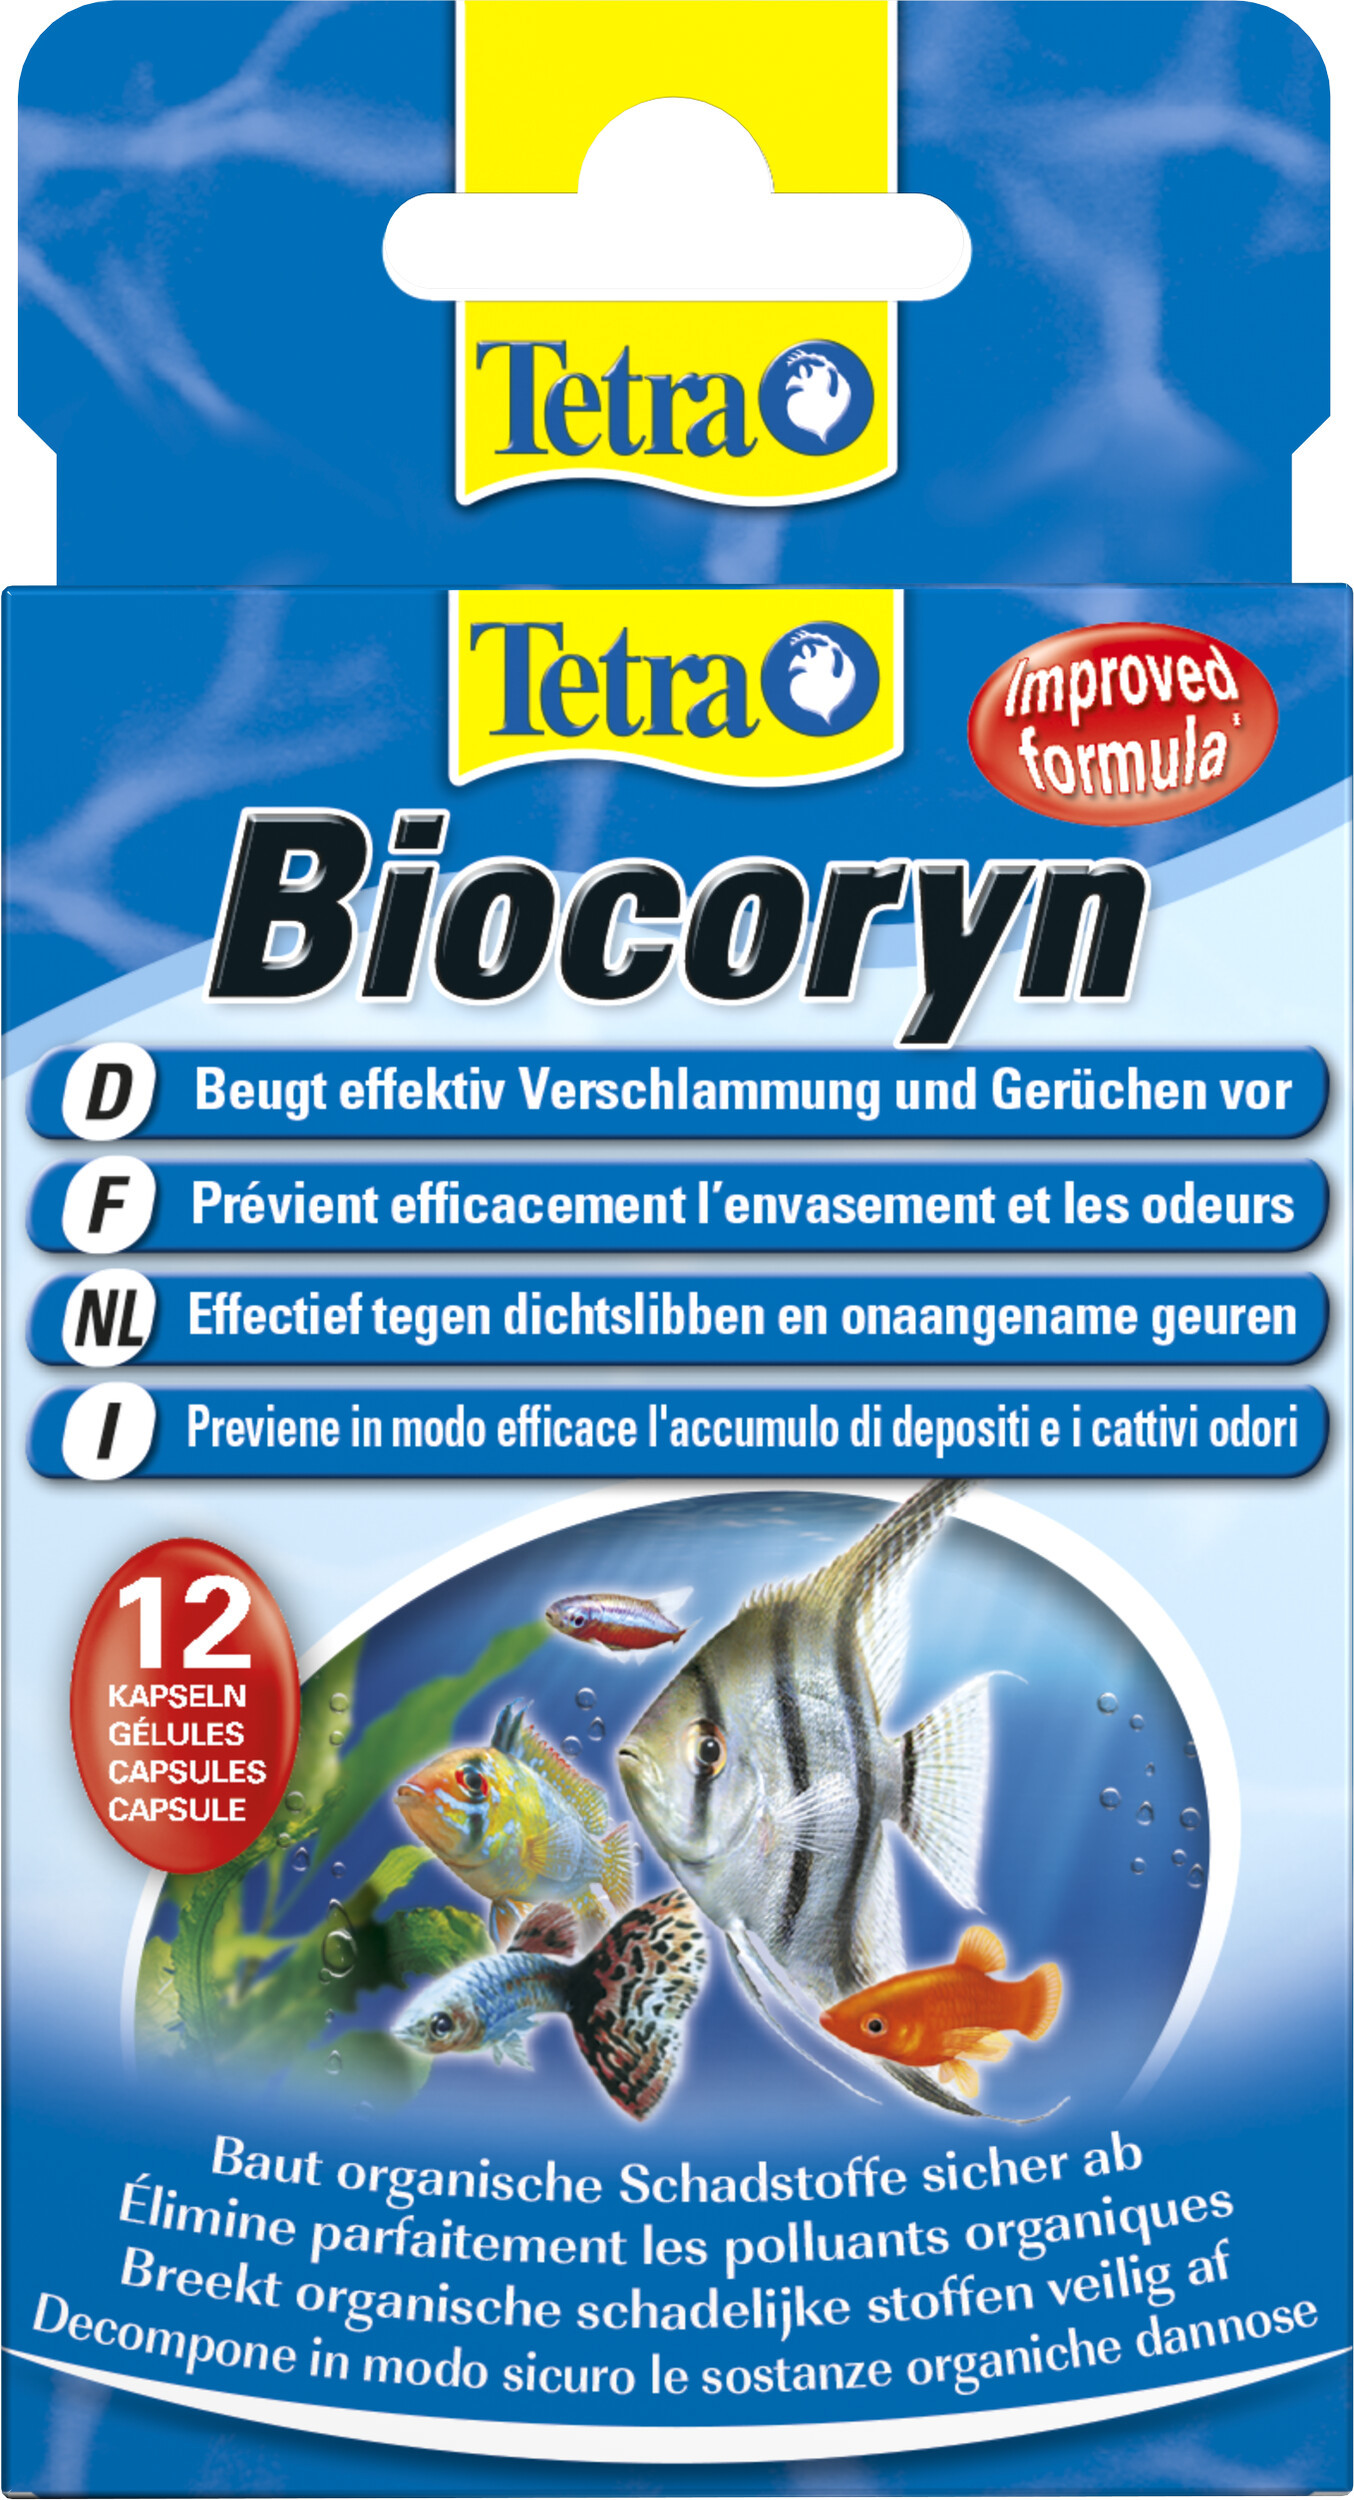 Tetra+Biocoryn